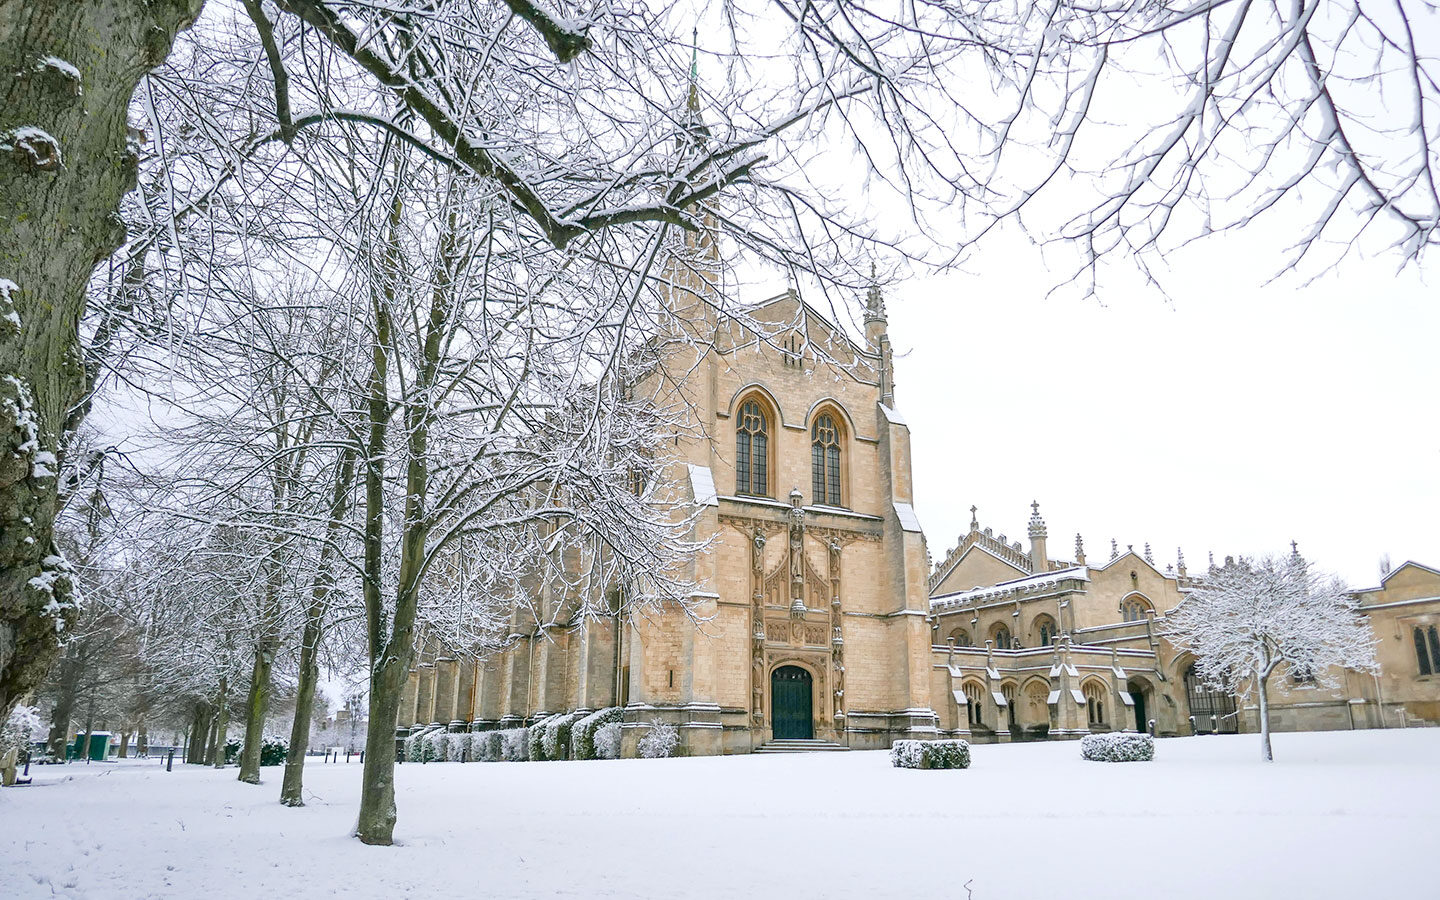 Cheltenham College chapel in the snow on a winter weekend in Cheltenham